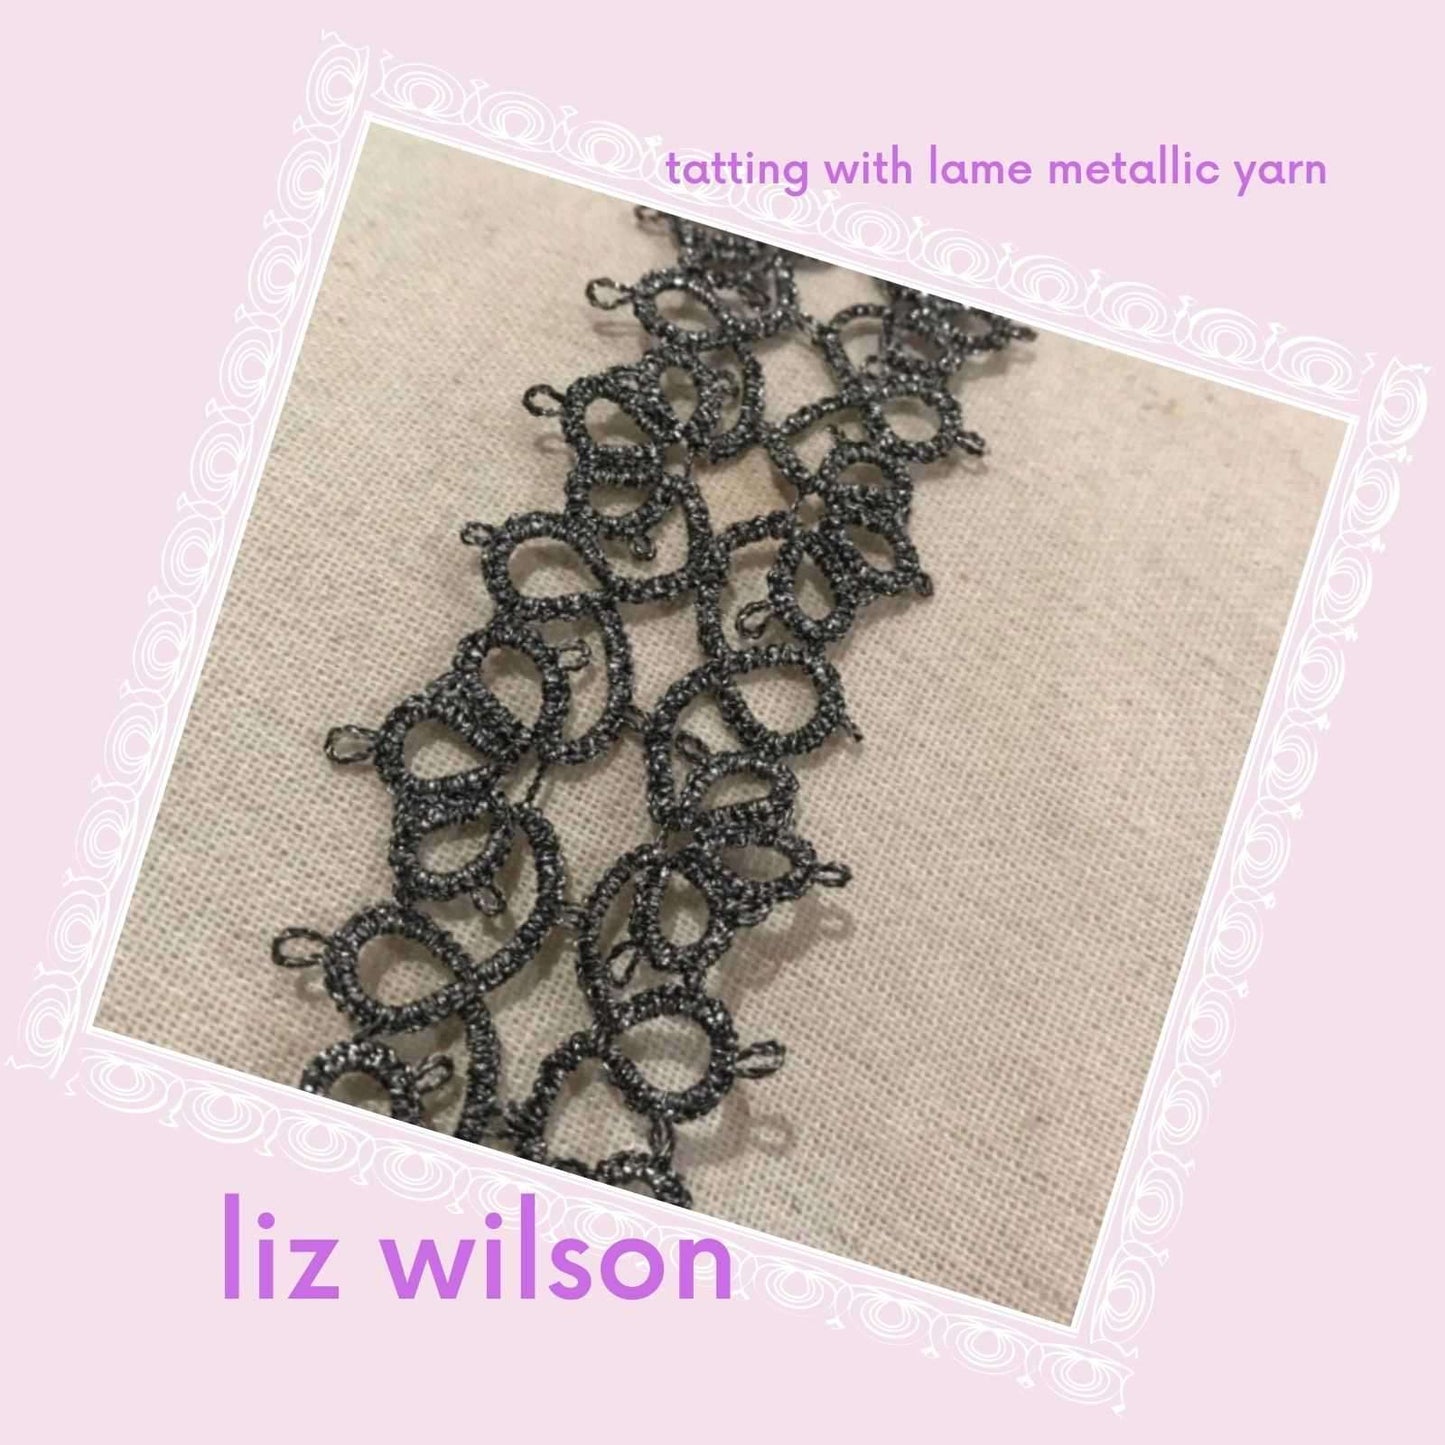 Crochet lace work using Daruma Metallic Lame yarn in Black Silver. By Liz Wilson